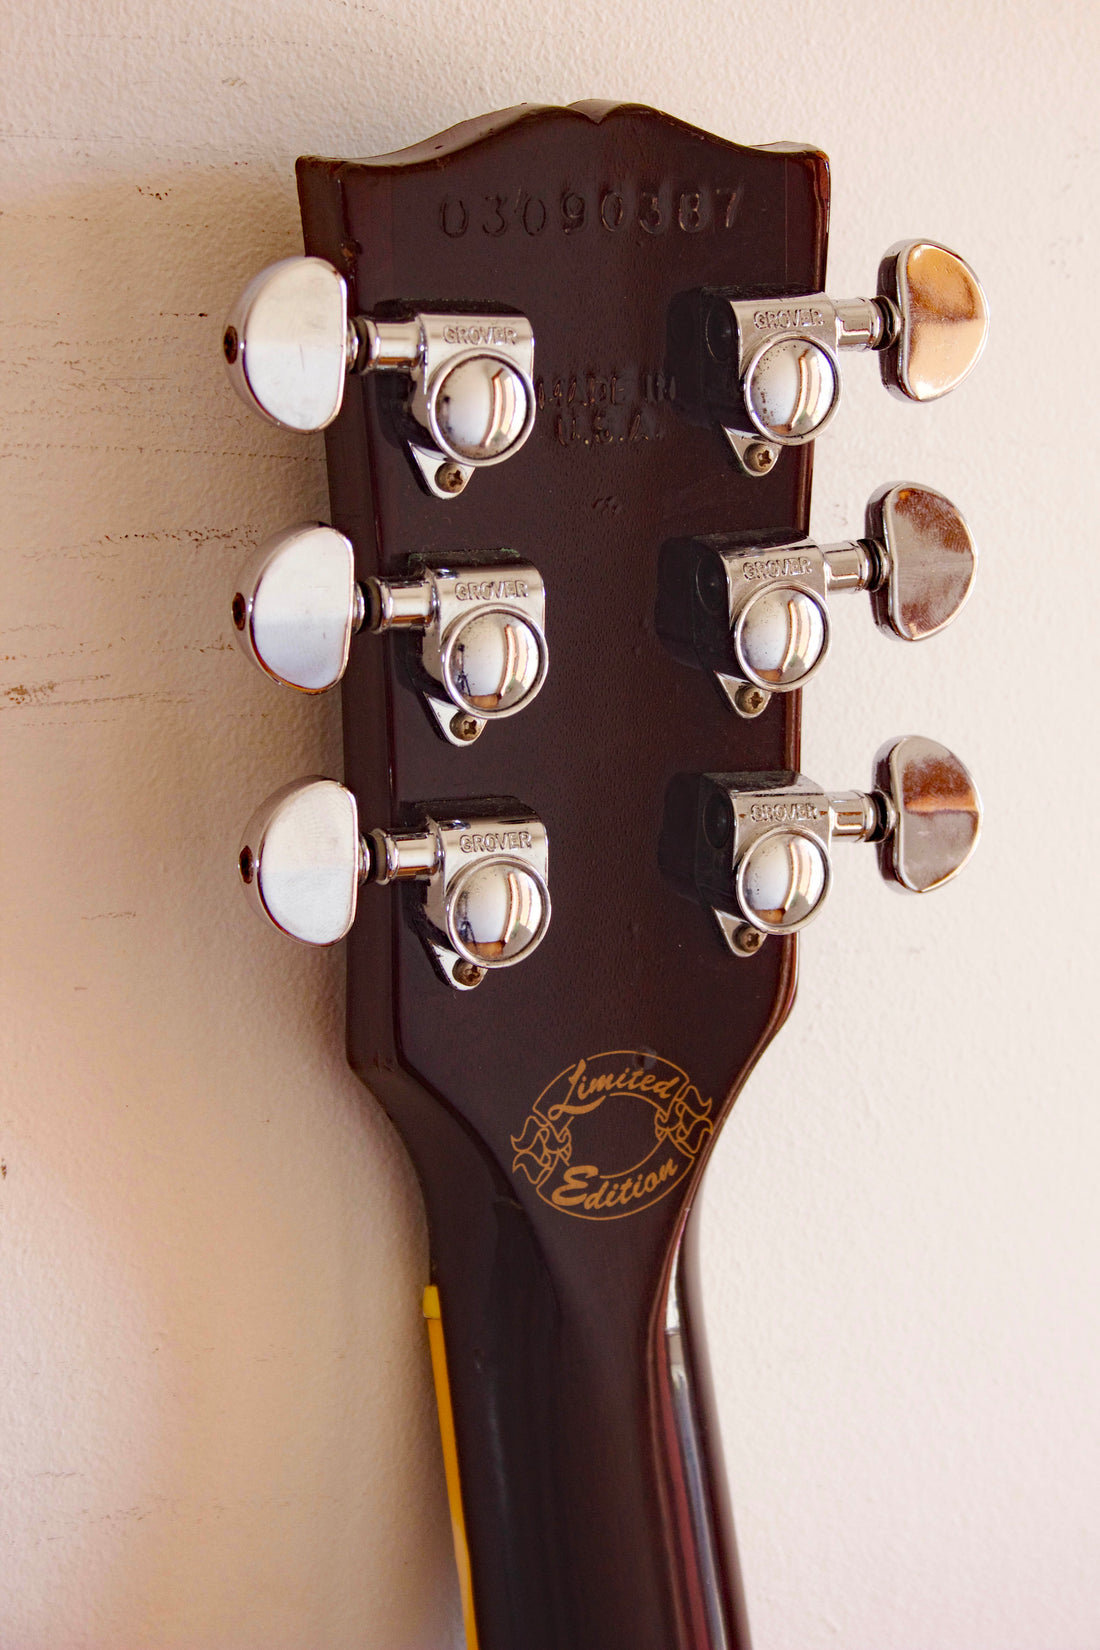 Gibson Les Paul Standard Sapphire Blue 2000